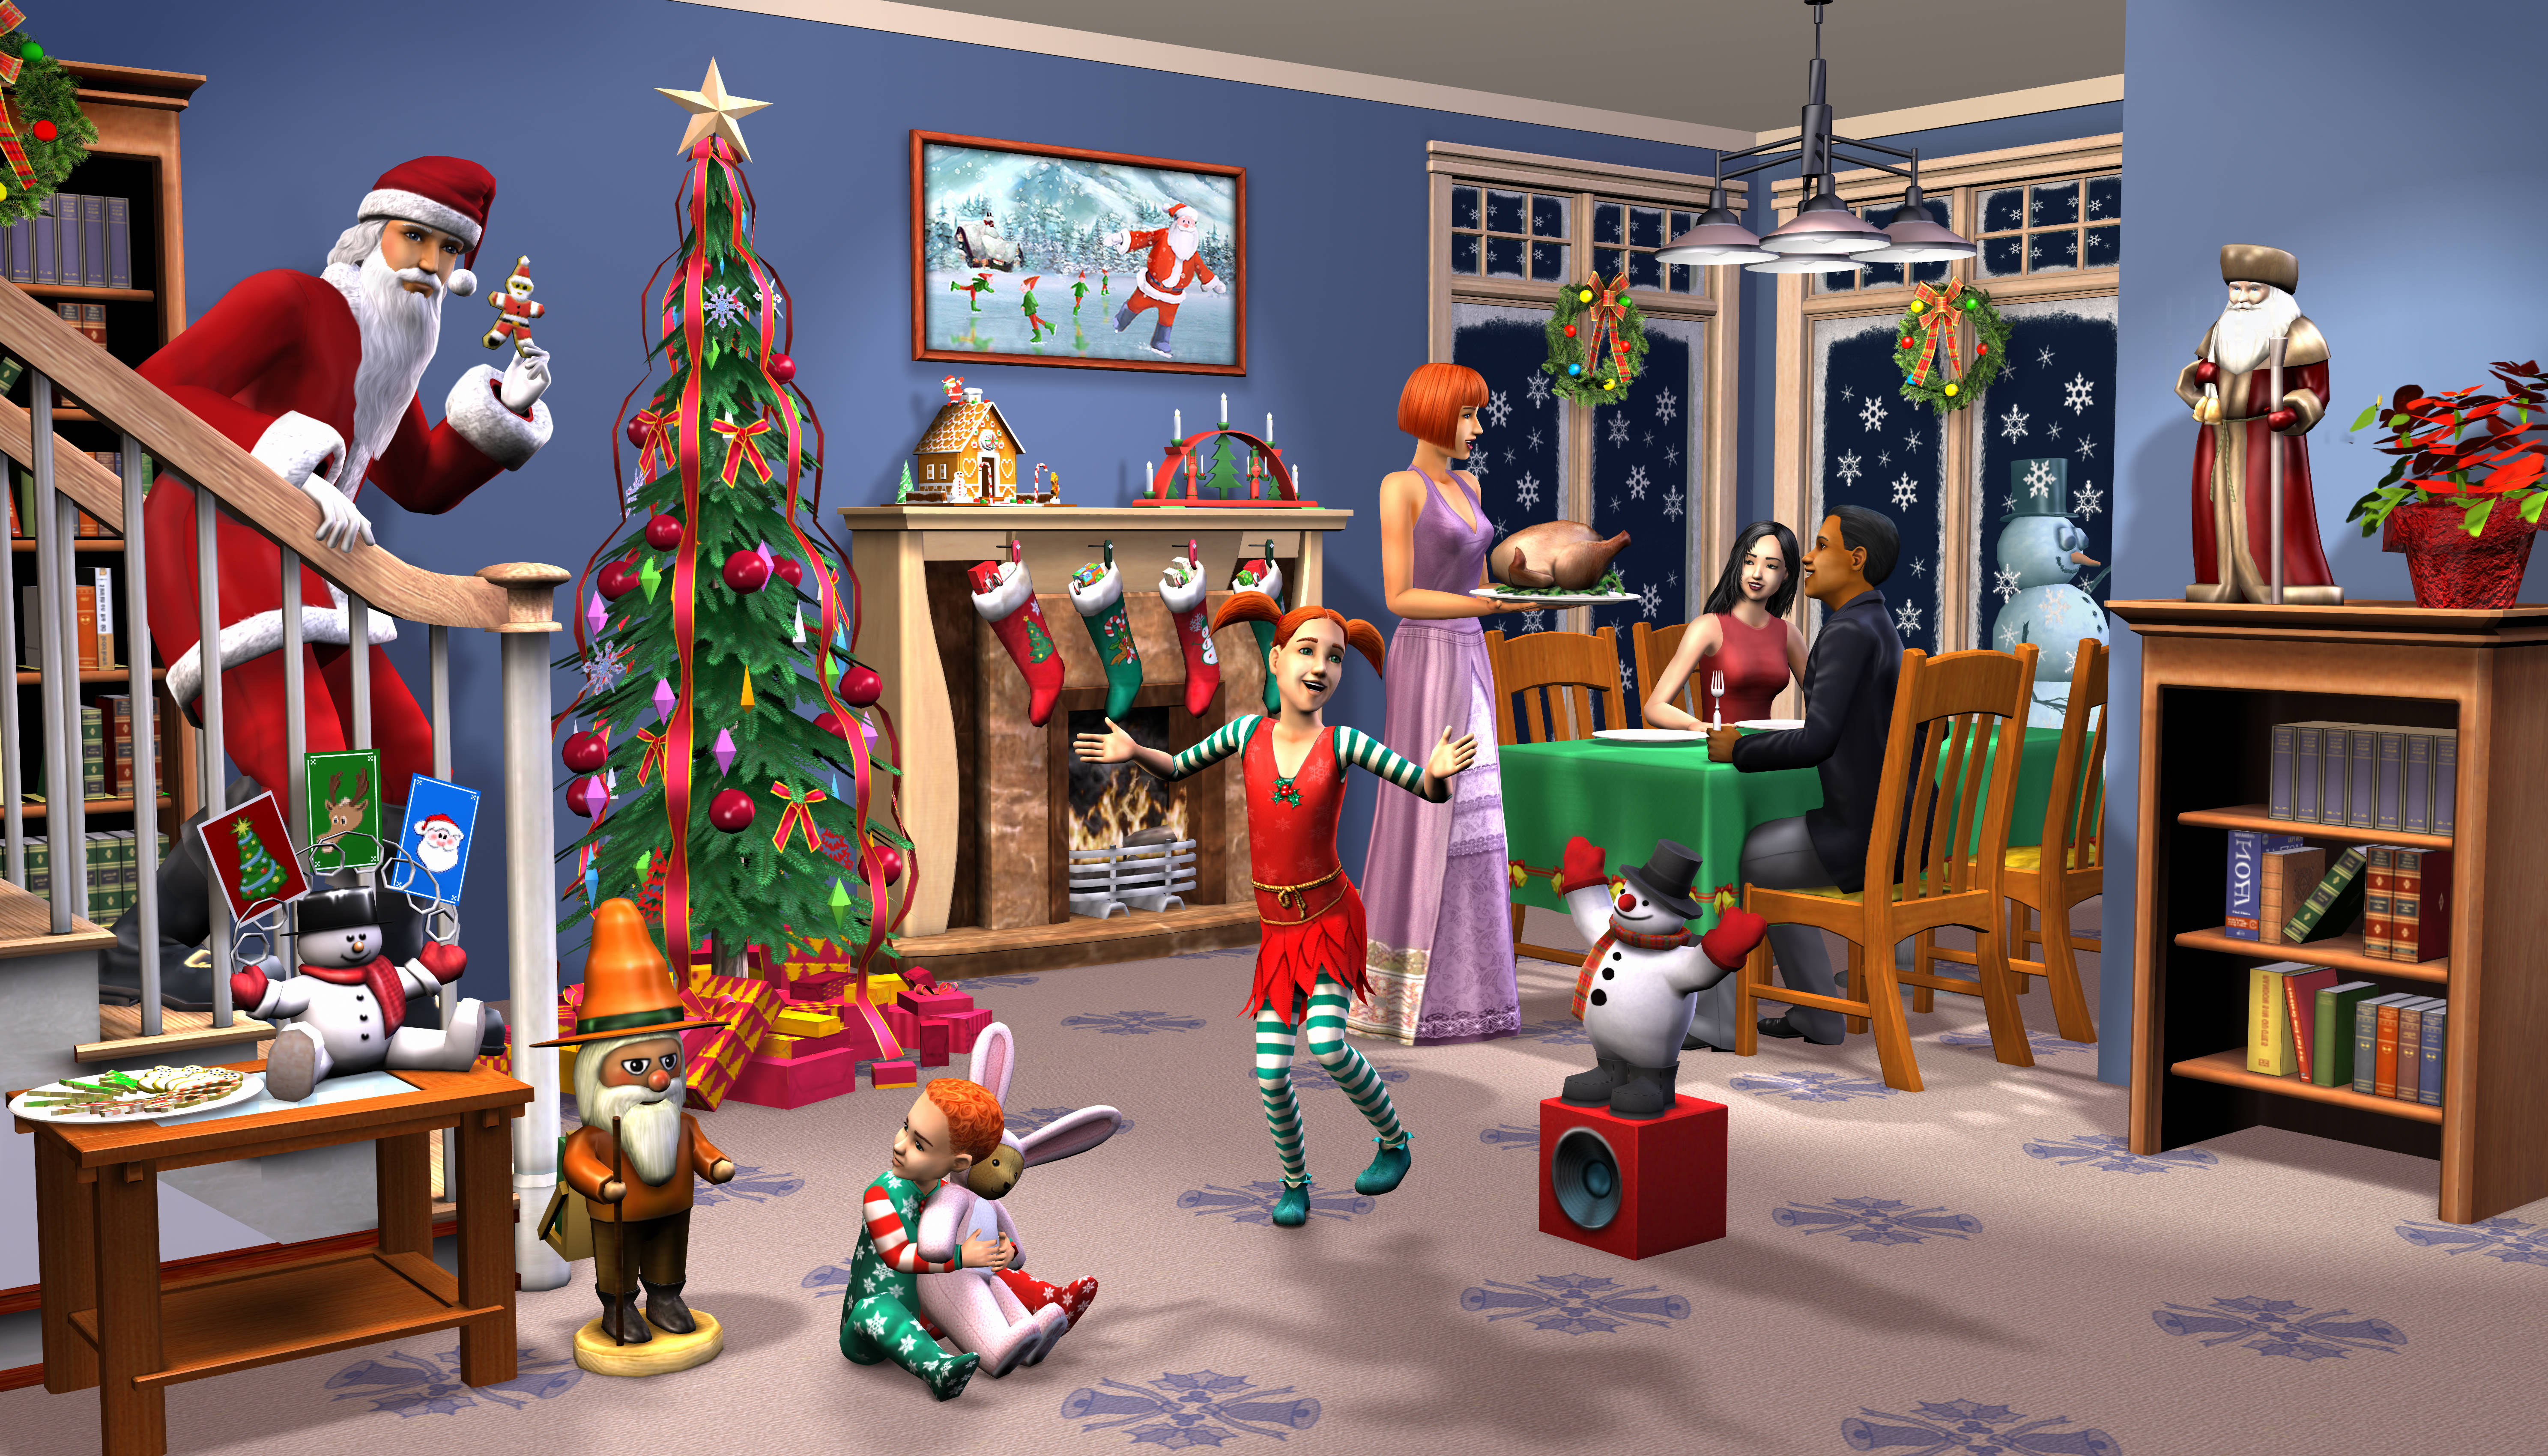 The Sims 3 Christmas